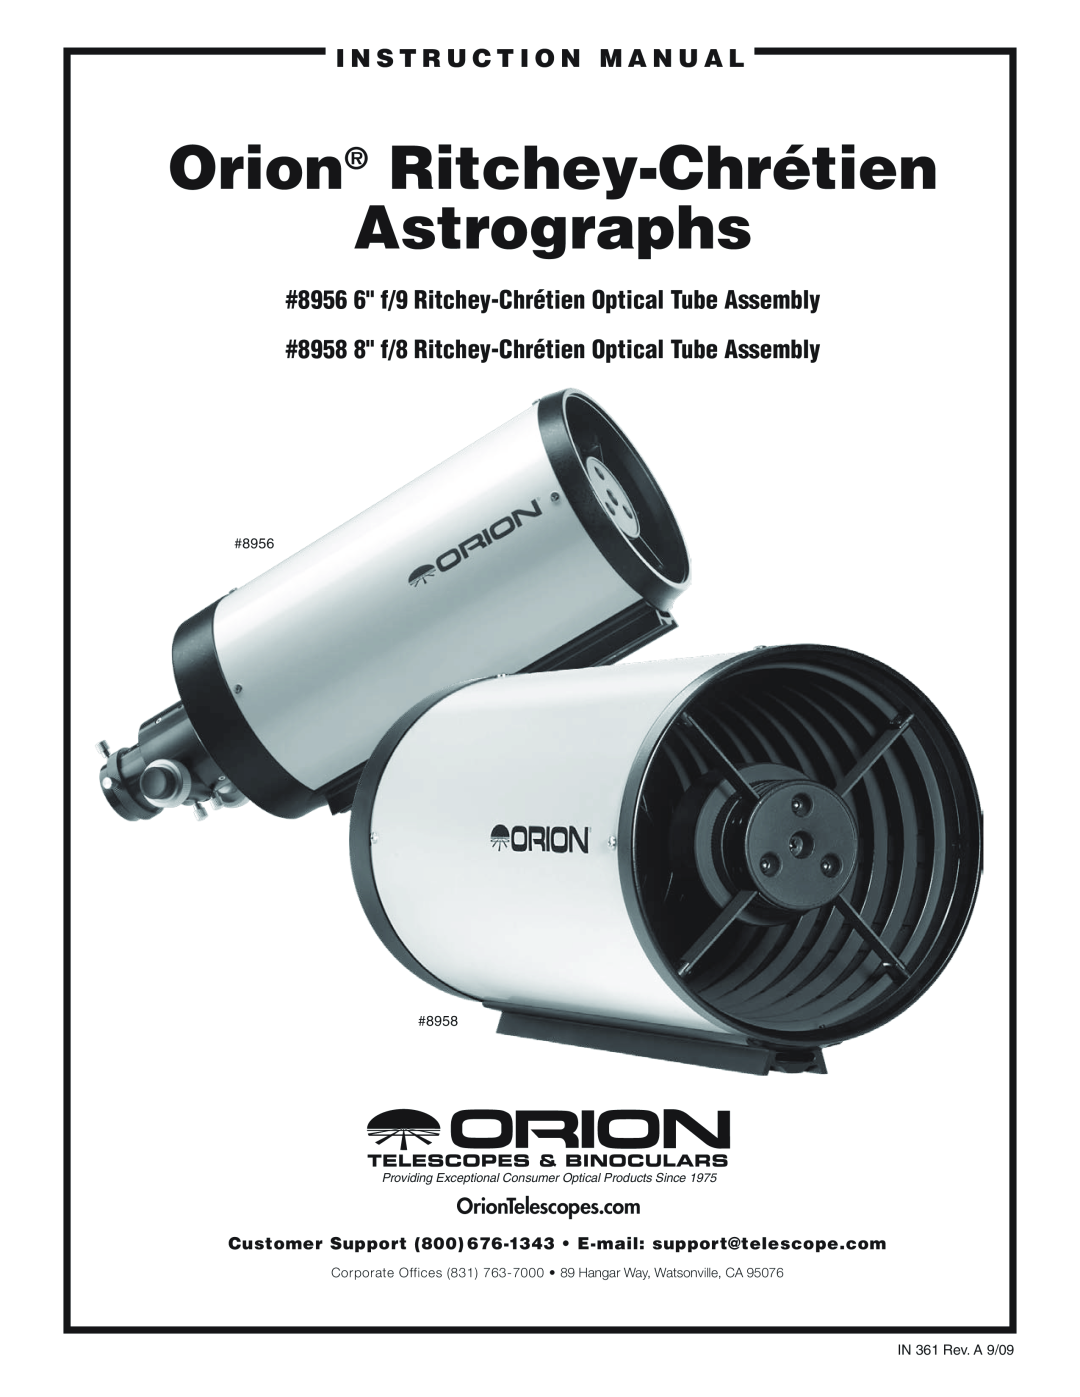 Orion 8958 instruction manual i n s t r u c t i o n M a n u a l, #8956 6 f/9 Ritchey-Chrétien Optical Tube Assembly 